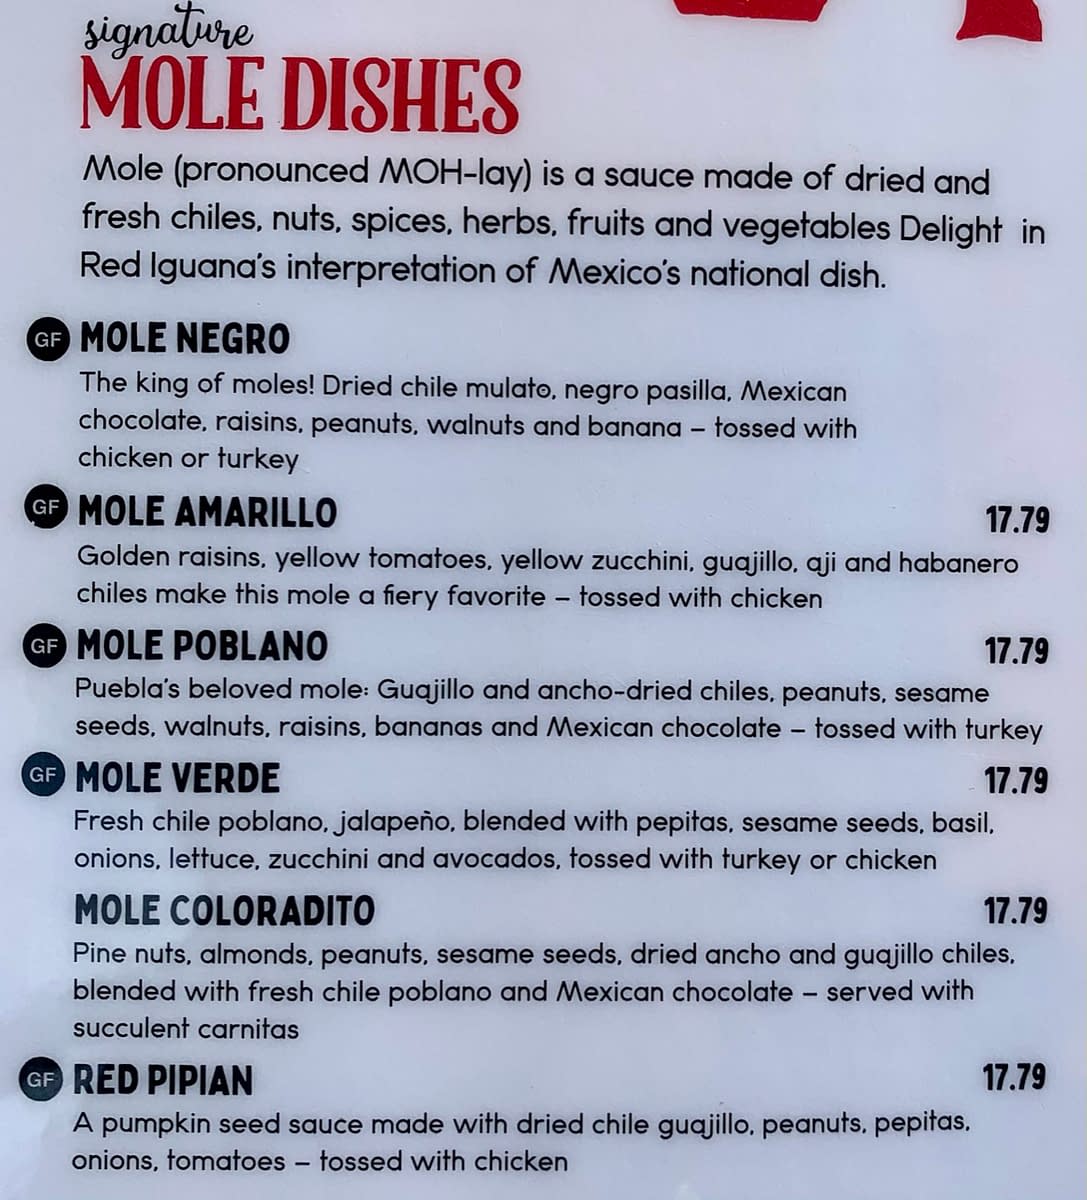 The mole menu at Red Iguana in Salt Lake City